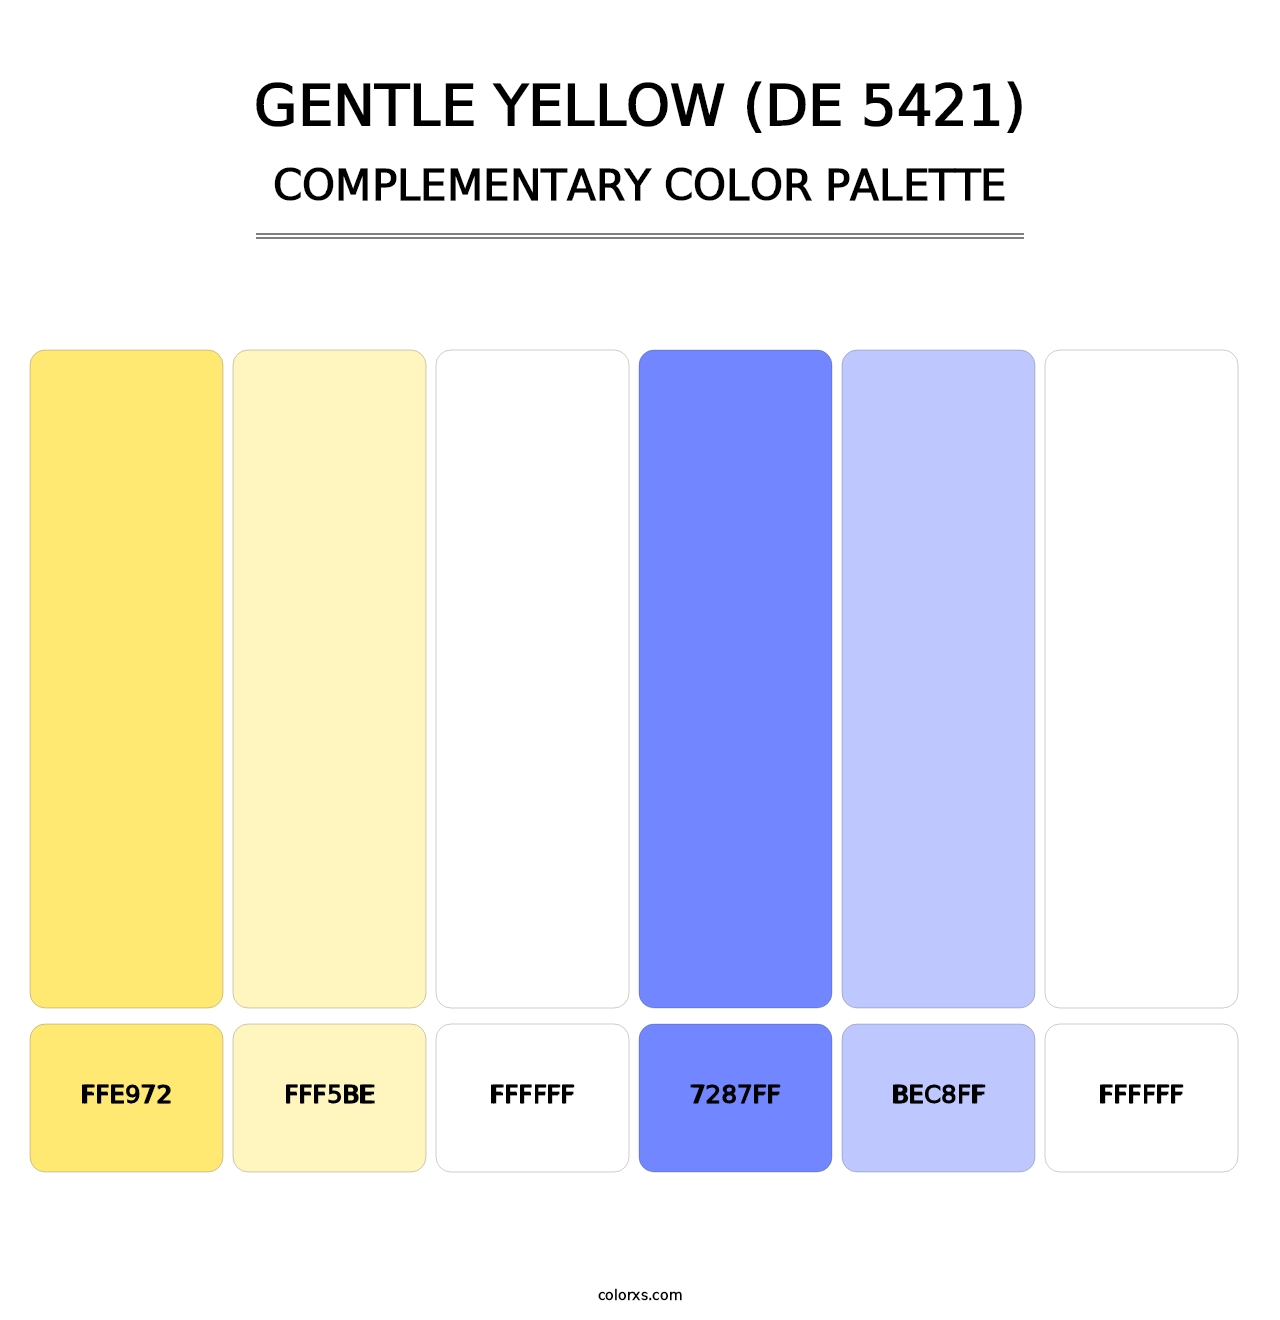 Gentle Yellow (DE 5421) - Complementary Color Palette